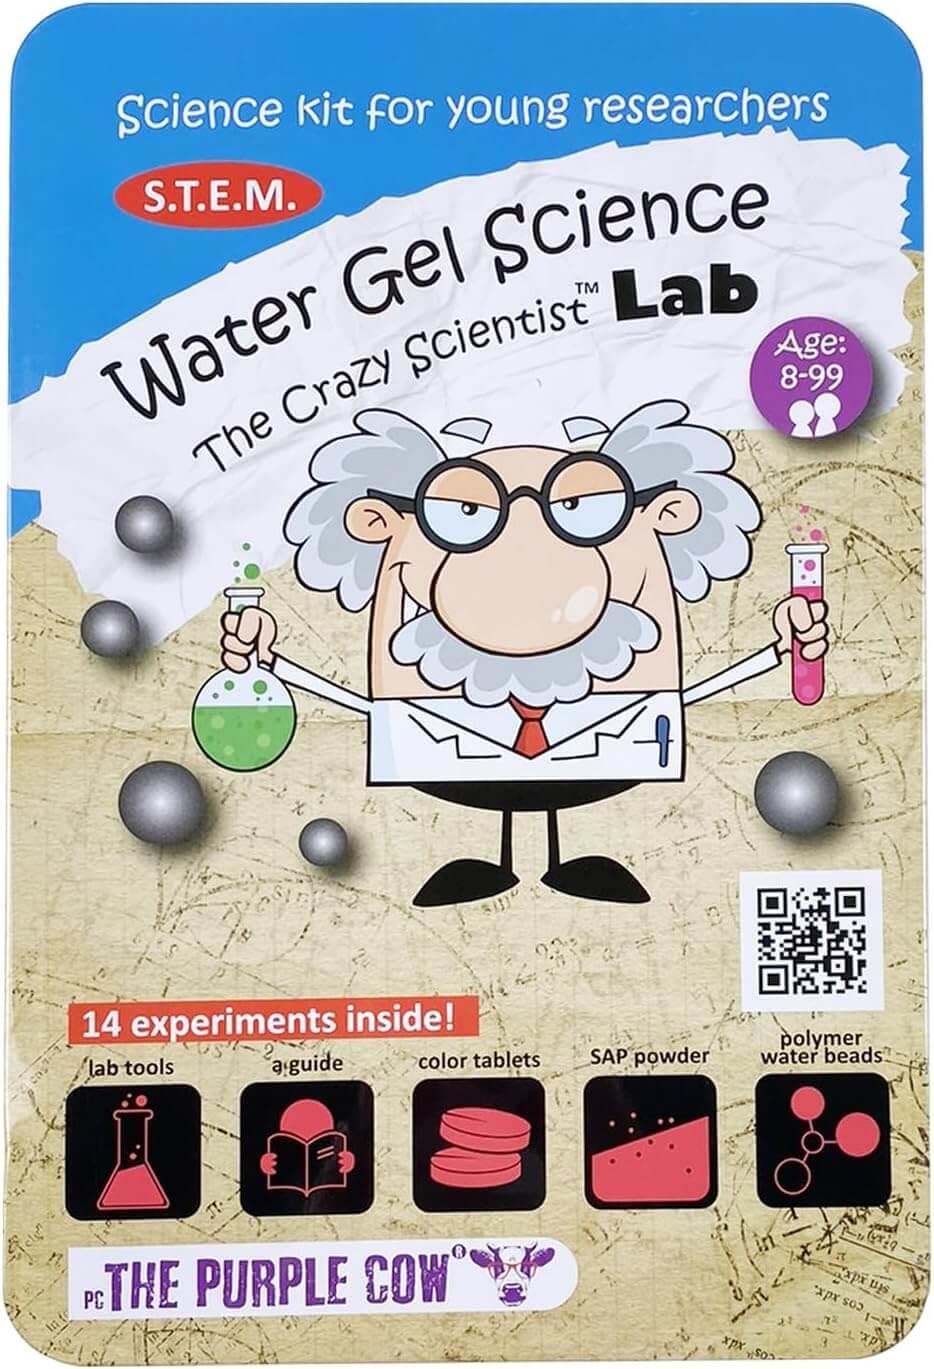 The Crazy Scientist Lab - Water Gel Science